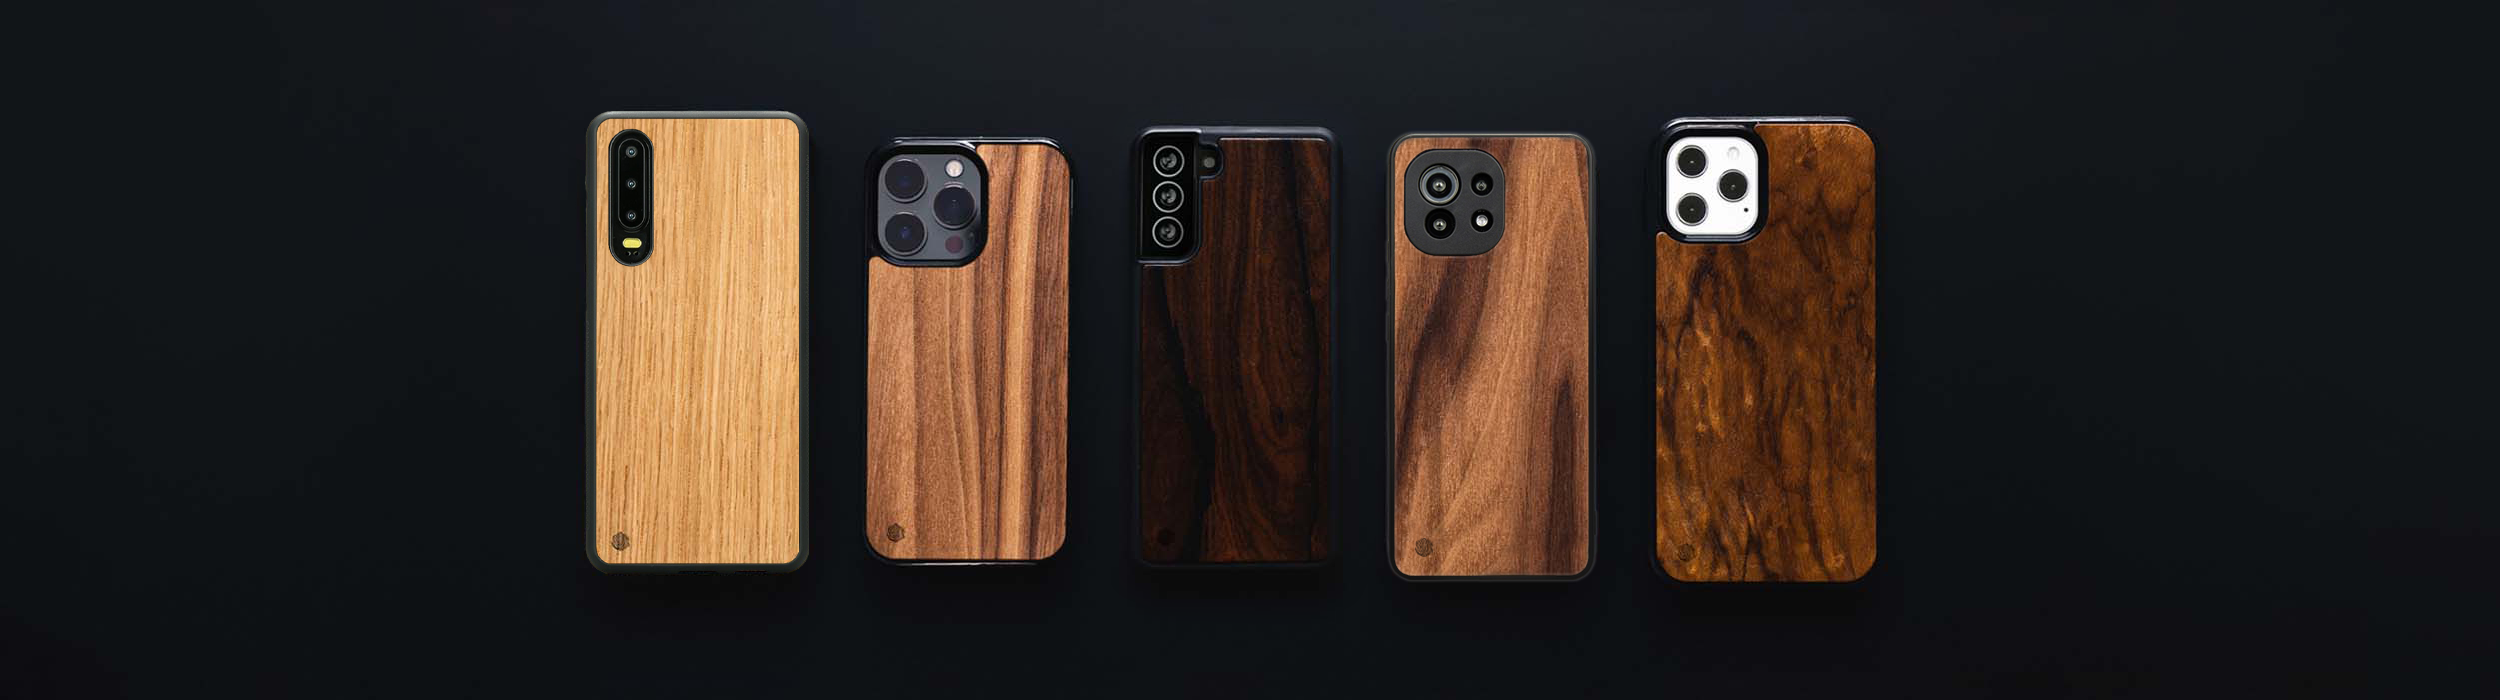 Xiaomi Mi 11 Wooden Phone Cases